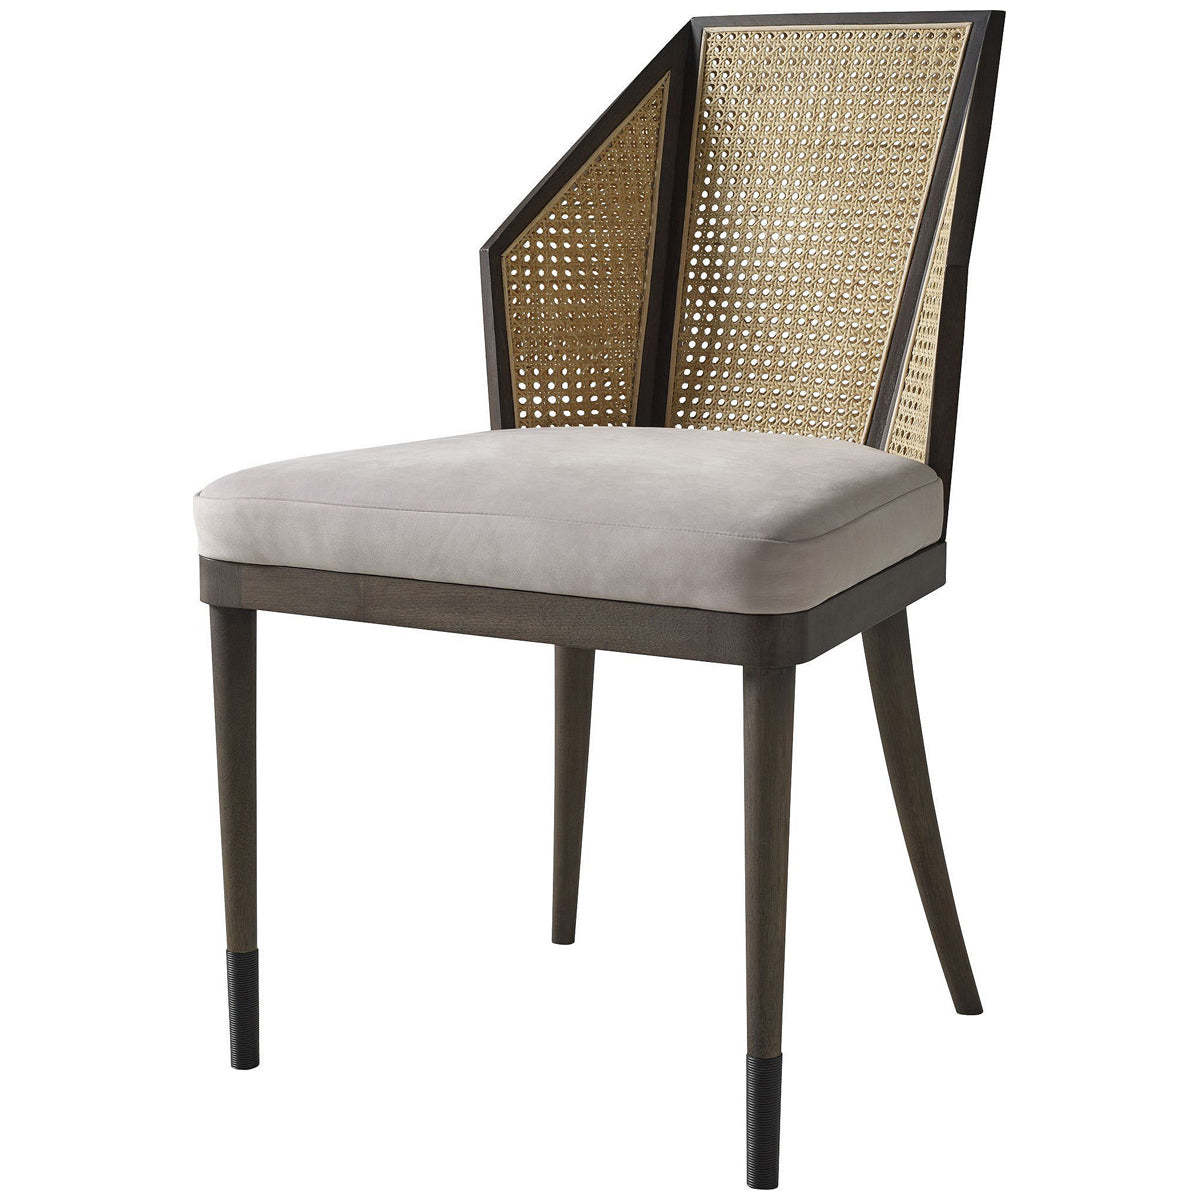 Baker Furniture Cane Side Chair MR7040